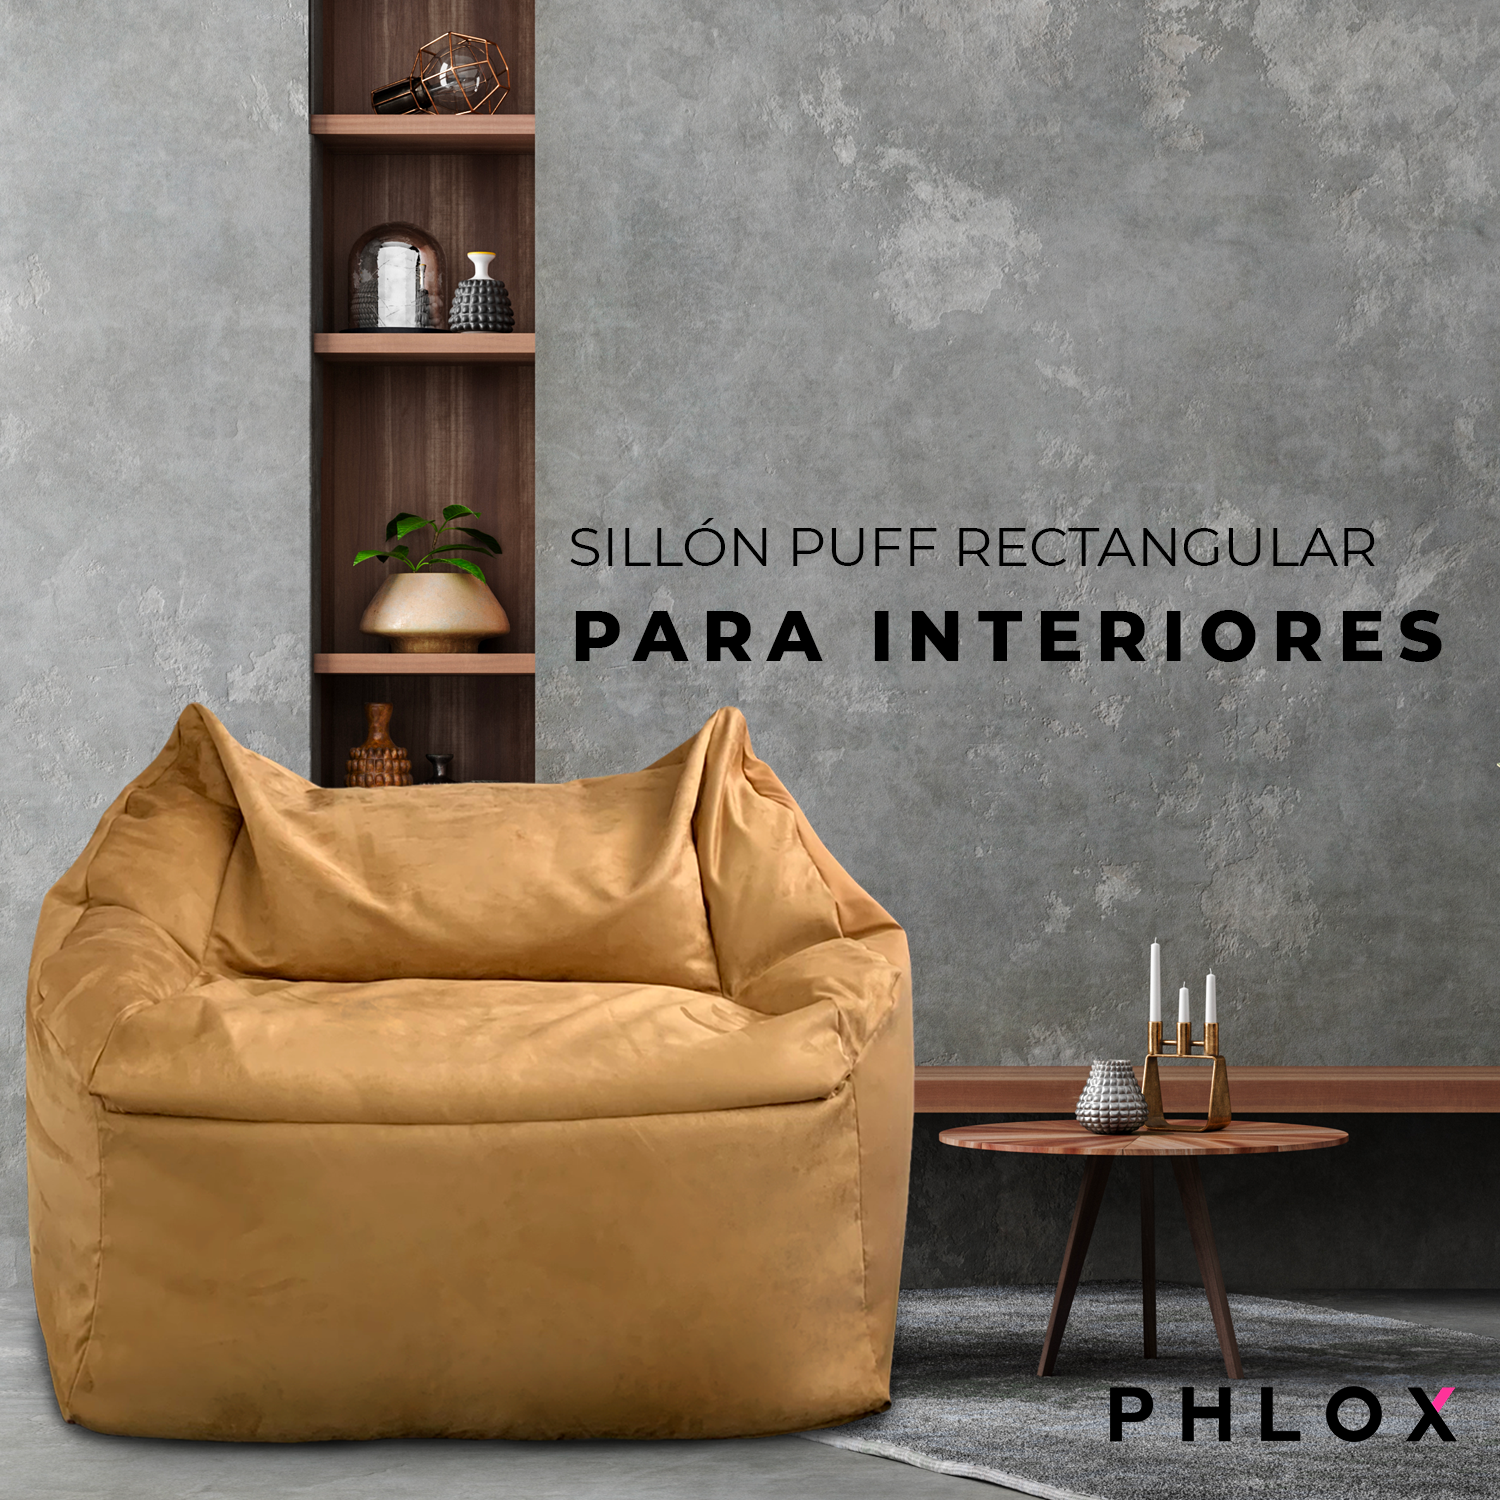 Puff rectangular  PHLOX - Creando espacios de confort